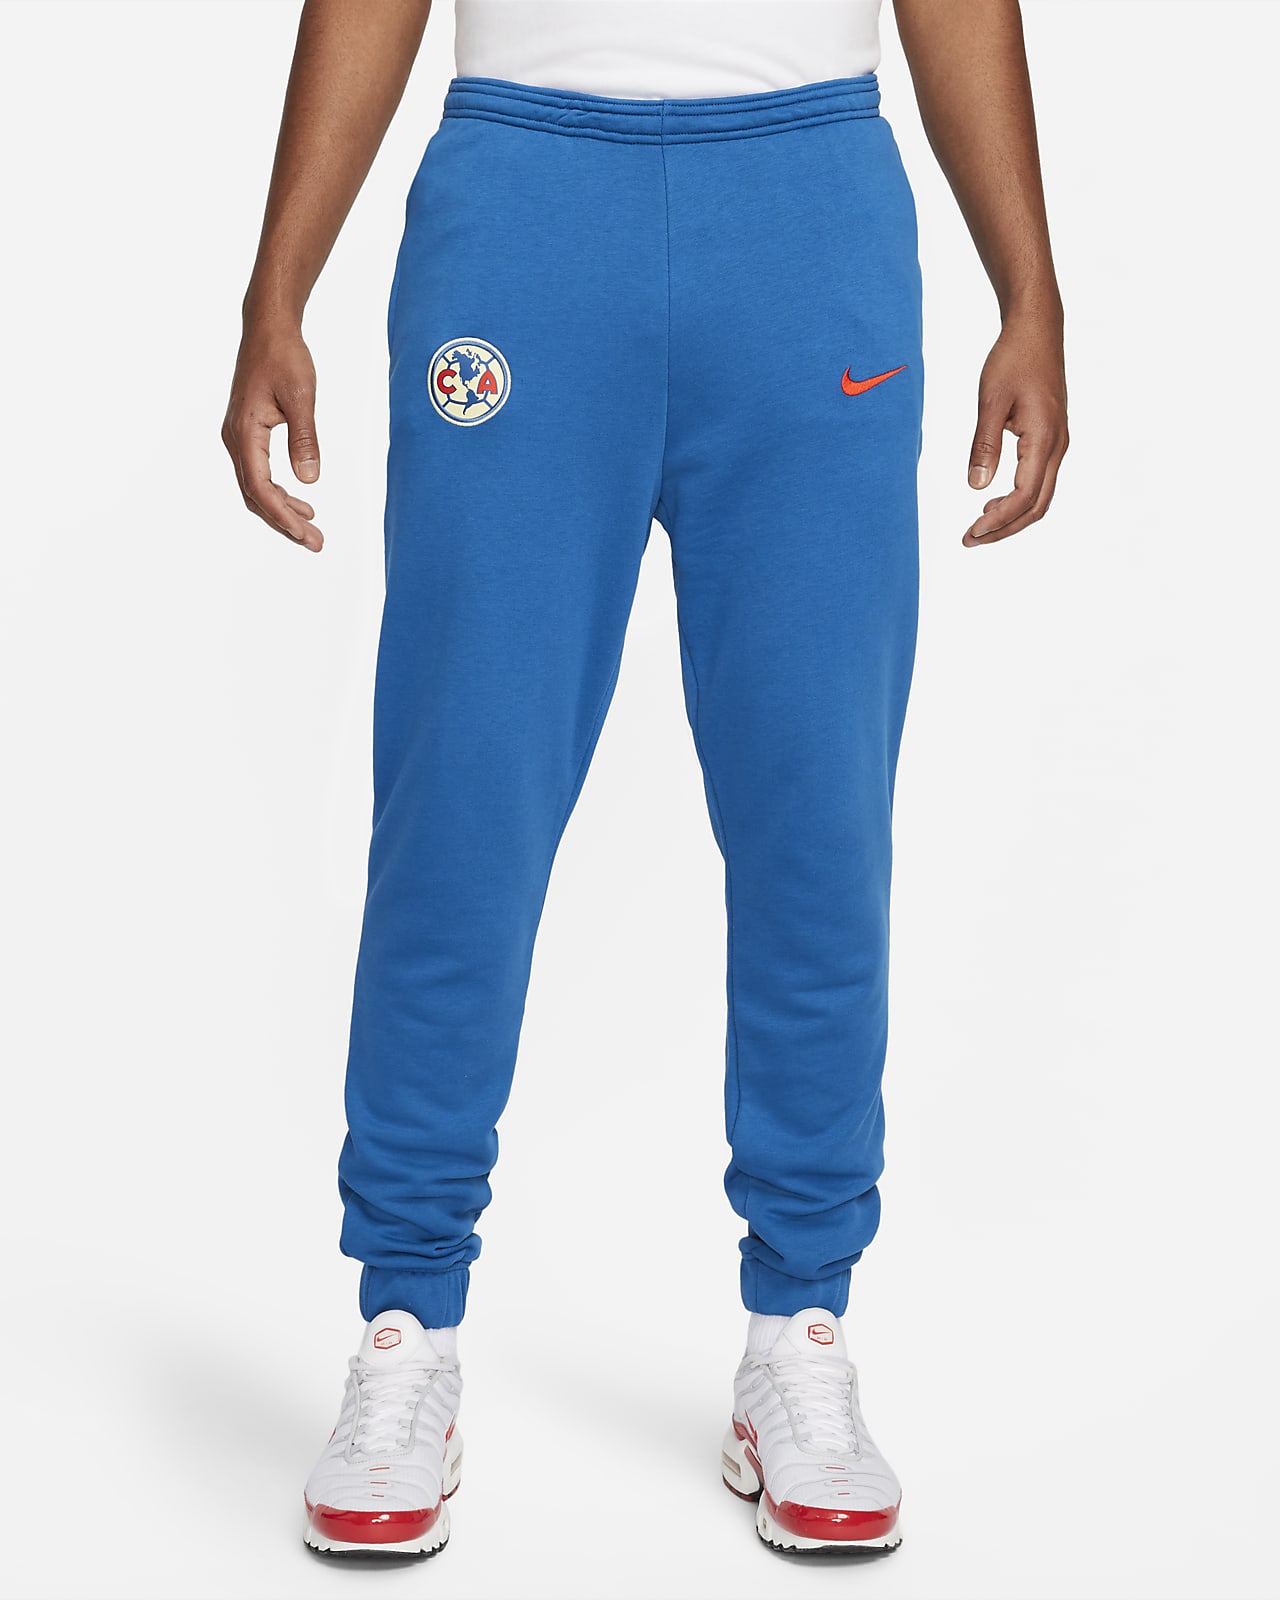 Pants de French Terry Nike del Club América para hombre